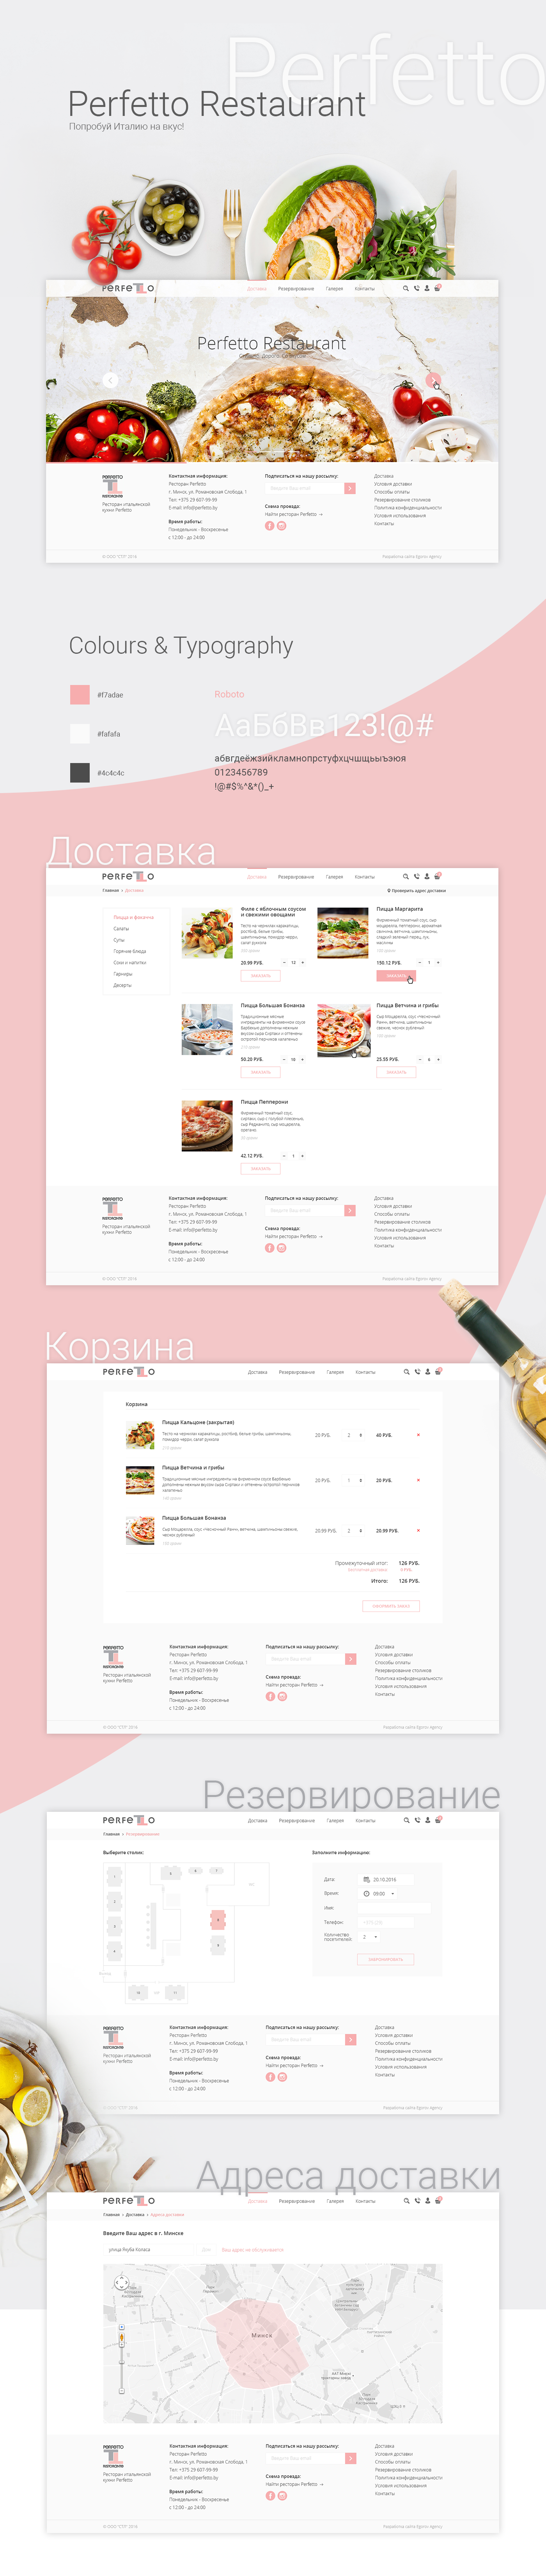 Egorovagency Egorov Agency web-design Responsive Design bitrix UI/UX front-end back-end Perfetto restaurant Website